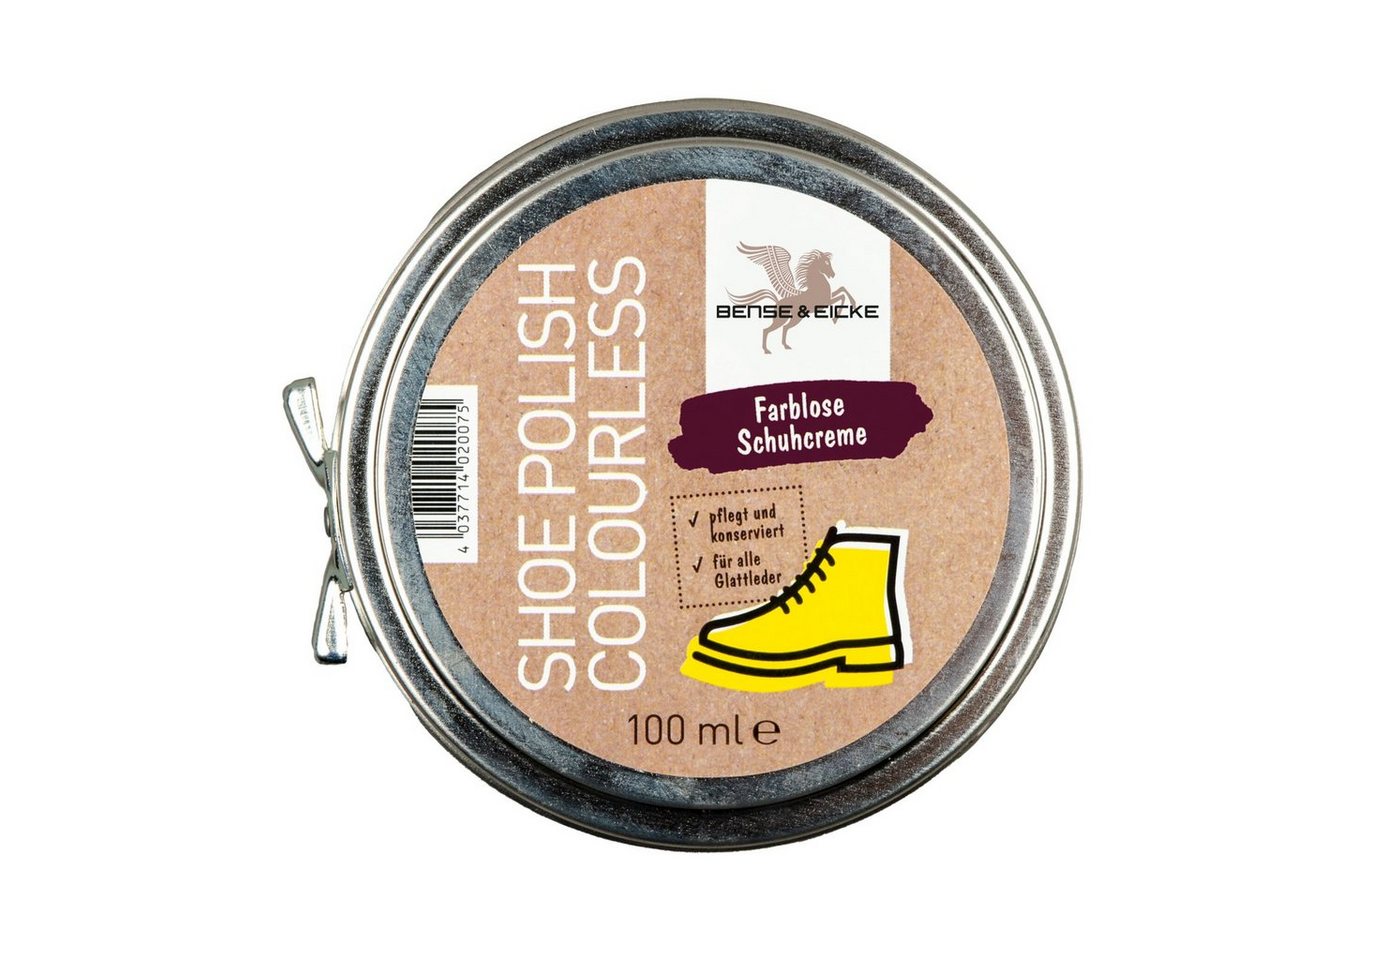 Bense & Eicke Shoe Polish colourless, Schuhcreme farblos - 100 ml Schuhcreme von Bense & Eicke